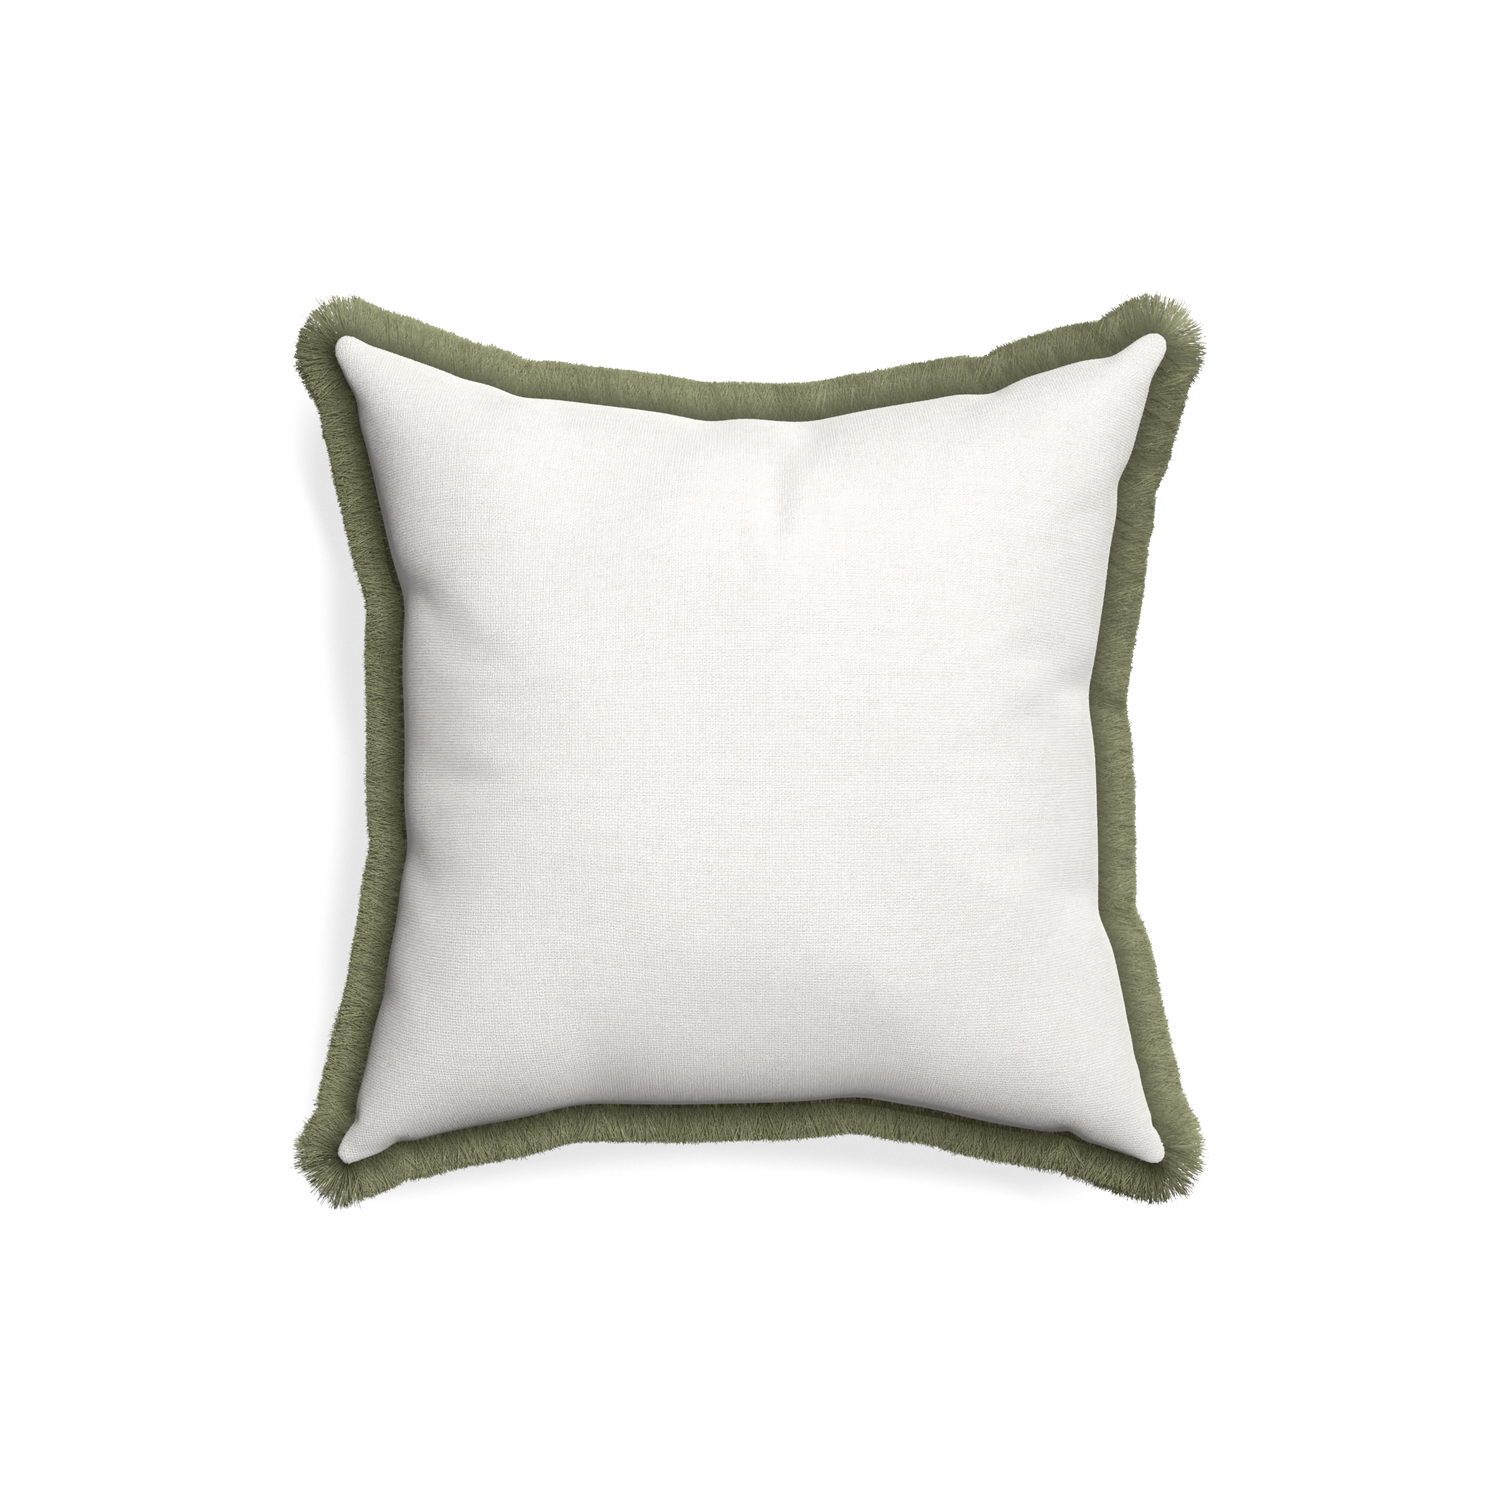 18-square flour custom pillow with sage fringe on white background